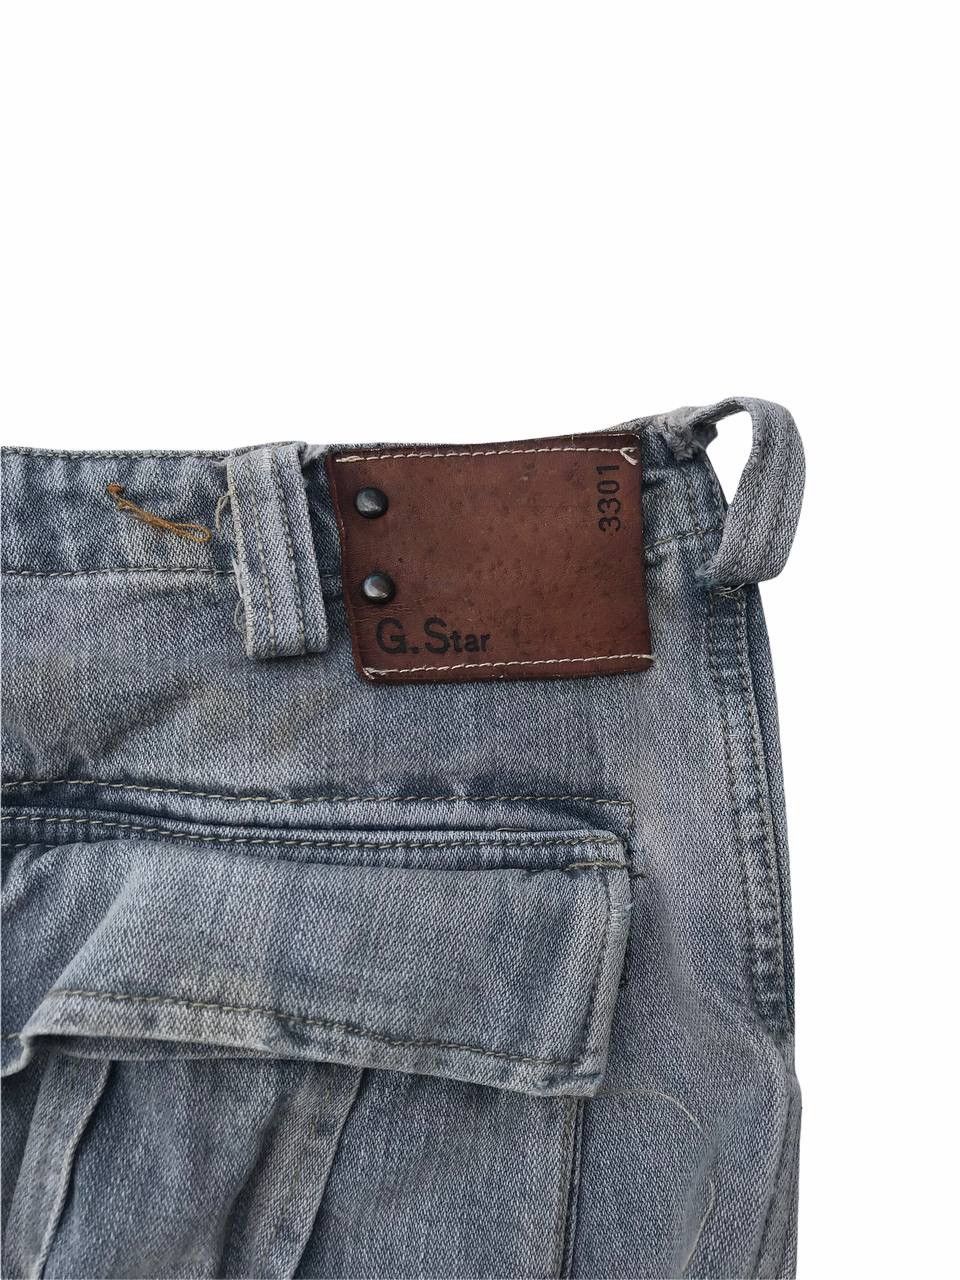 Gstar Gstar Denim Cargo Multipocket Streetwear Fashion Pants Size US 31 - 12 Thumbnail